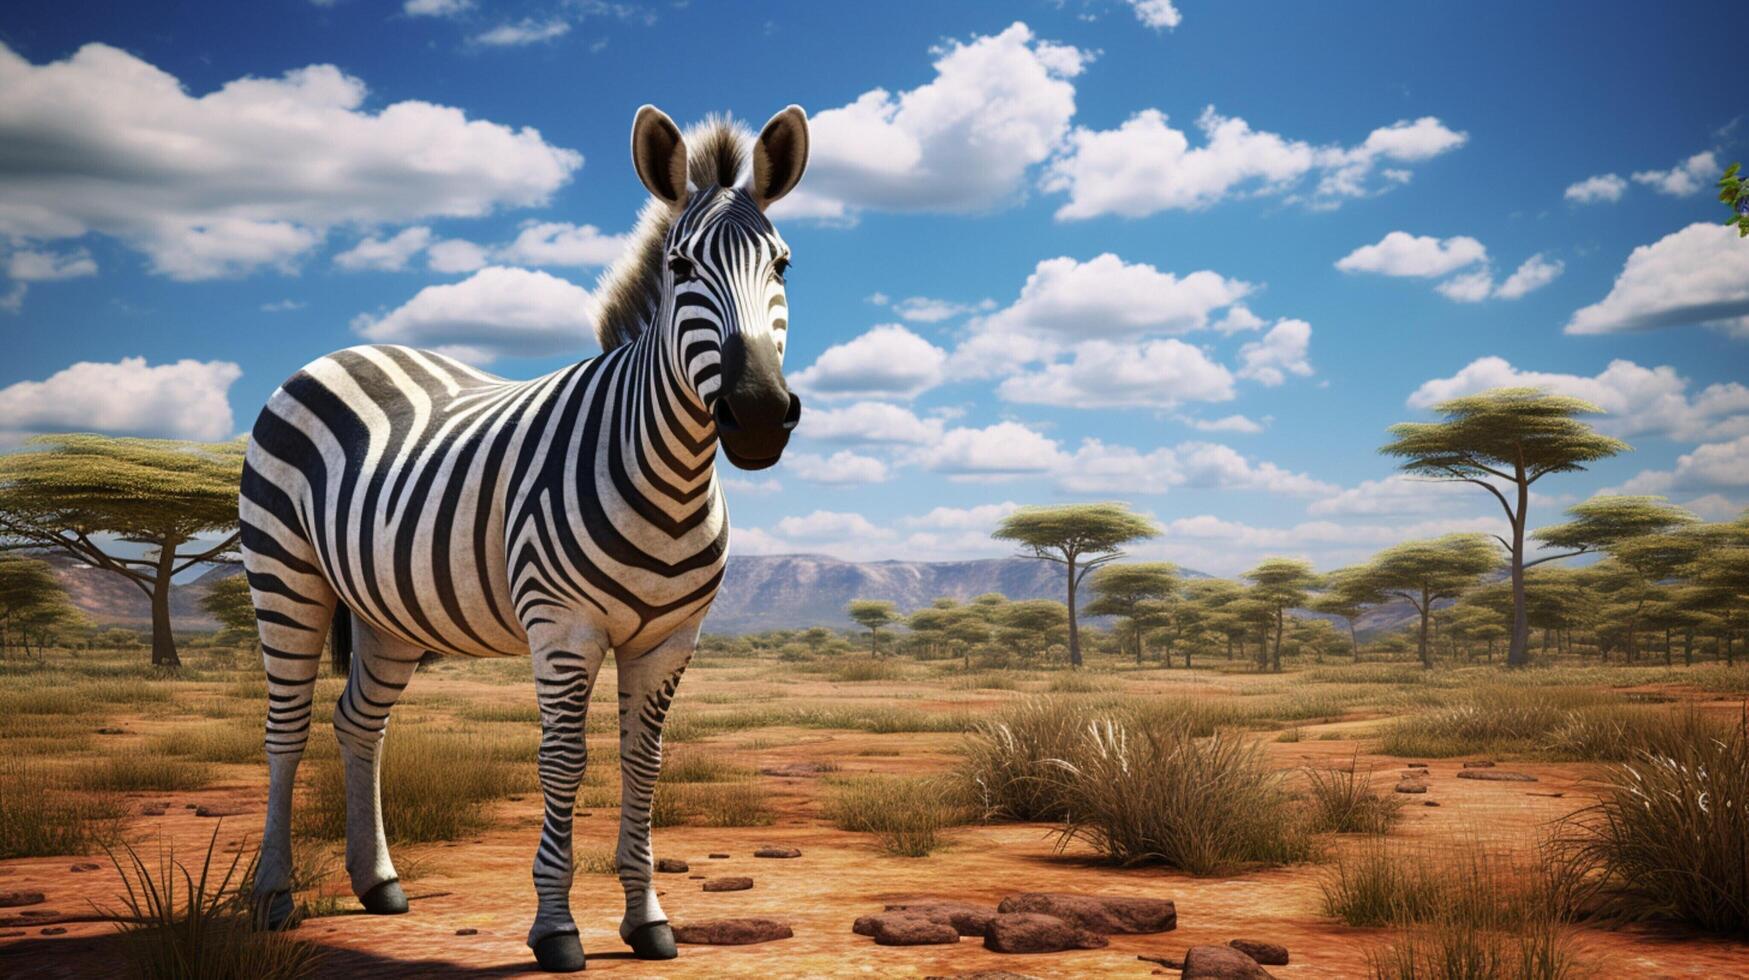 AI generated zebra high quality image photo